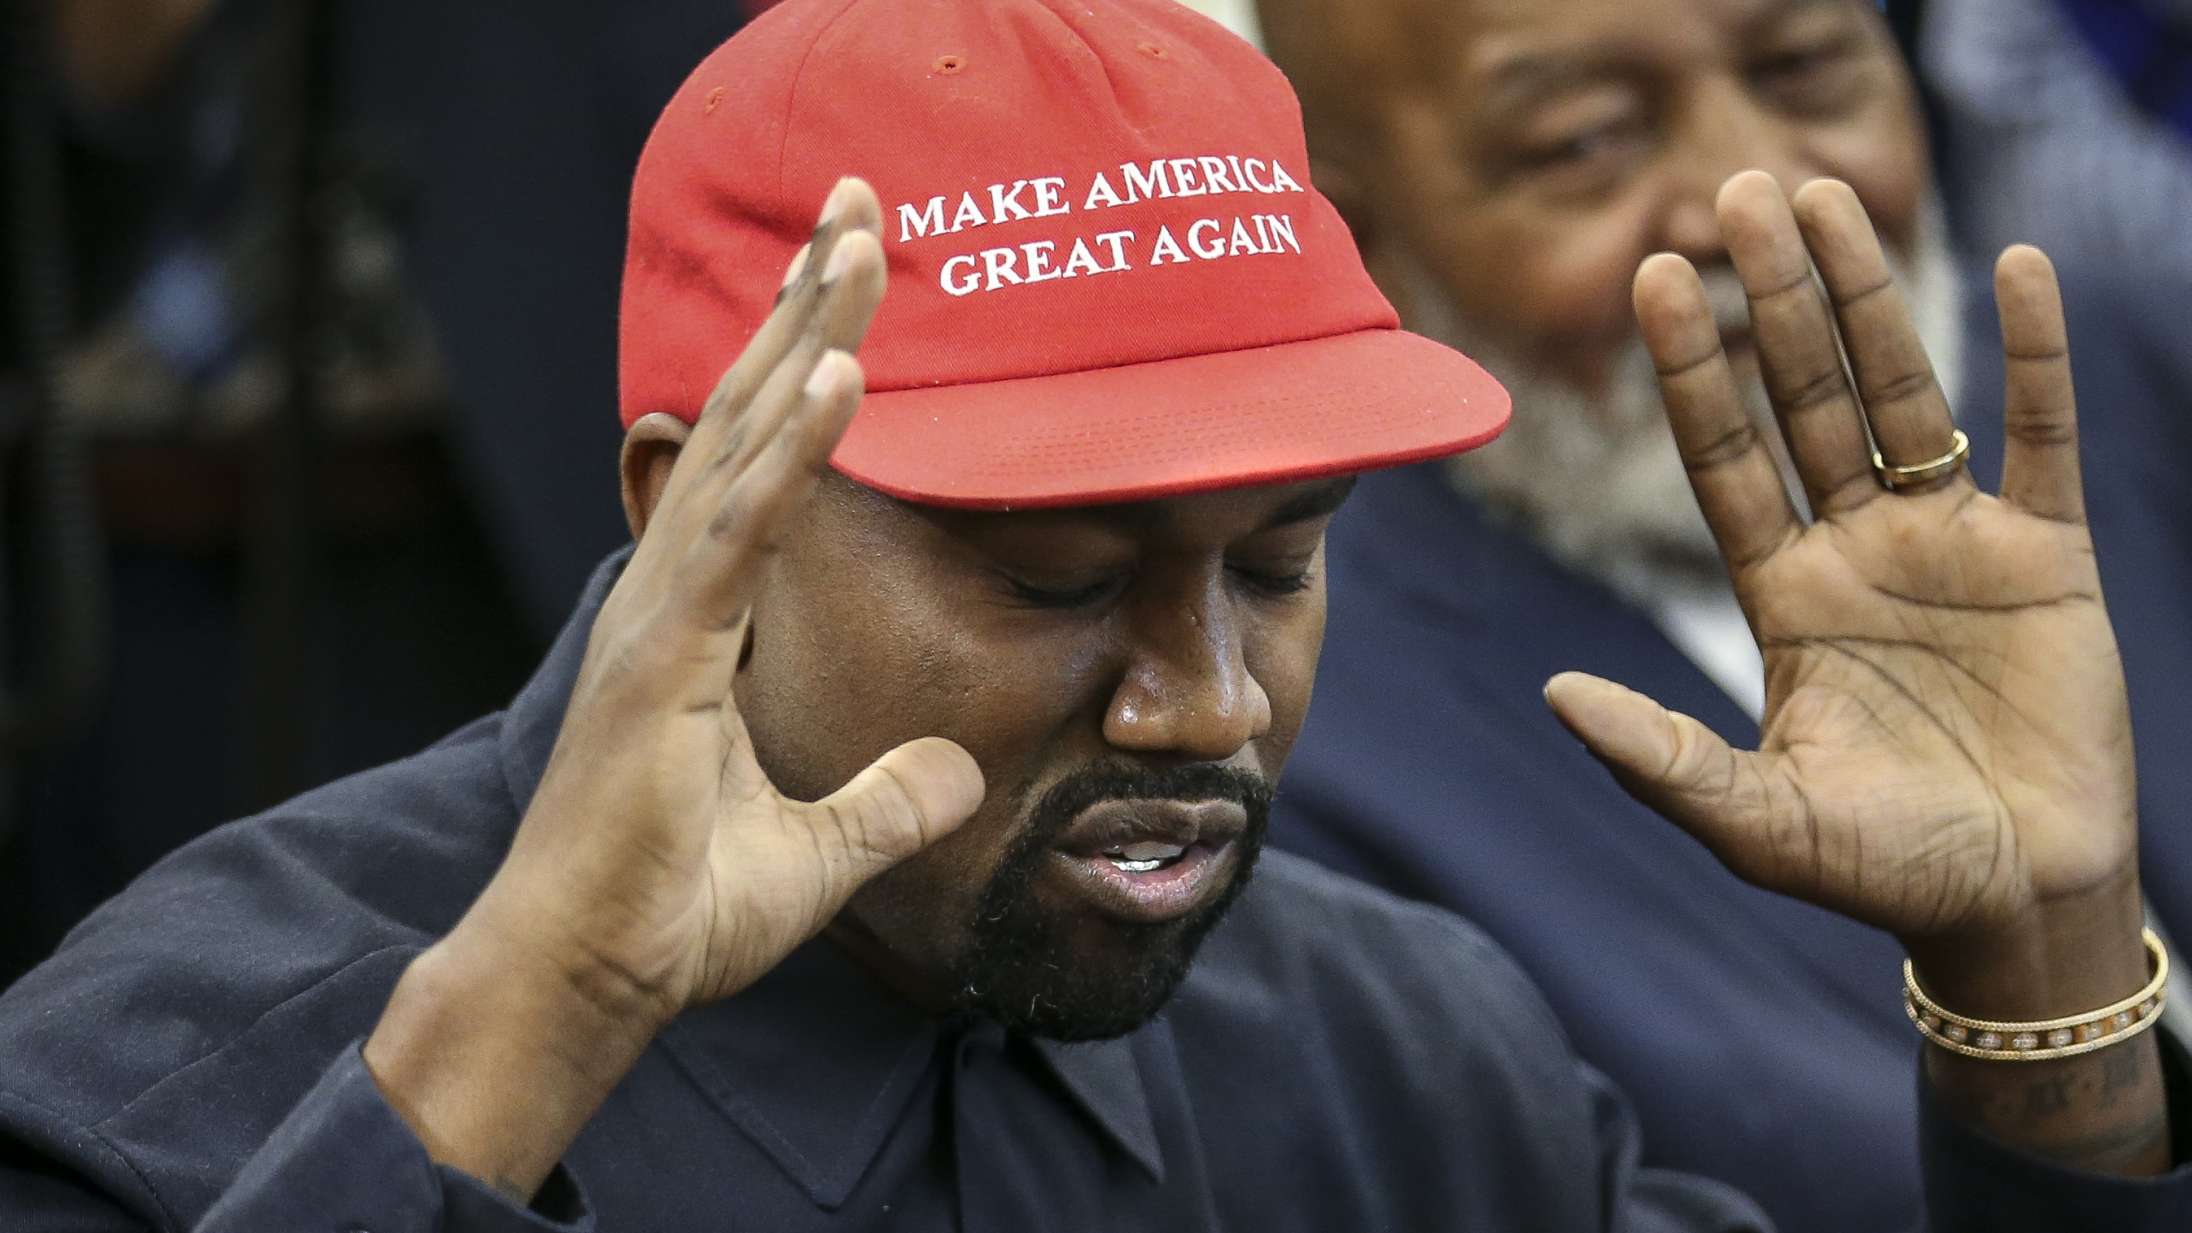 Kanye starter 2019 med pro-Trump-tale på Twitter